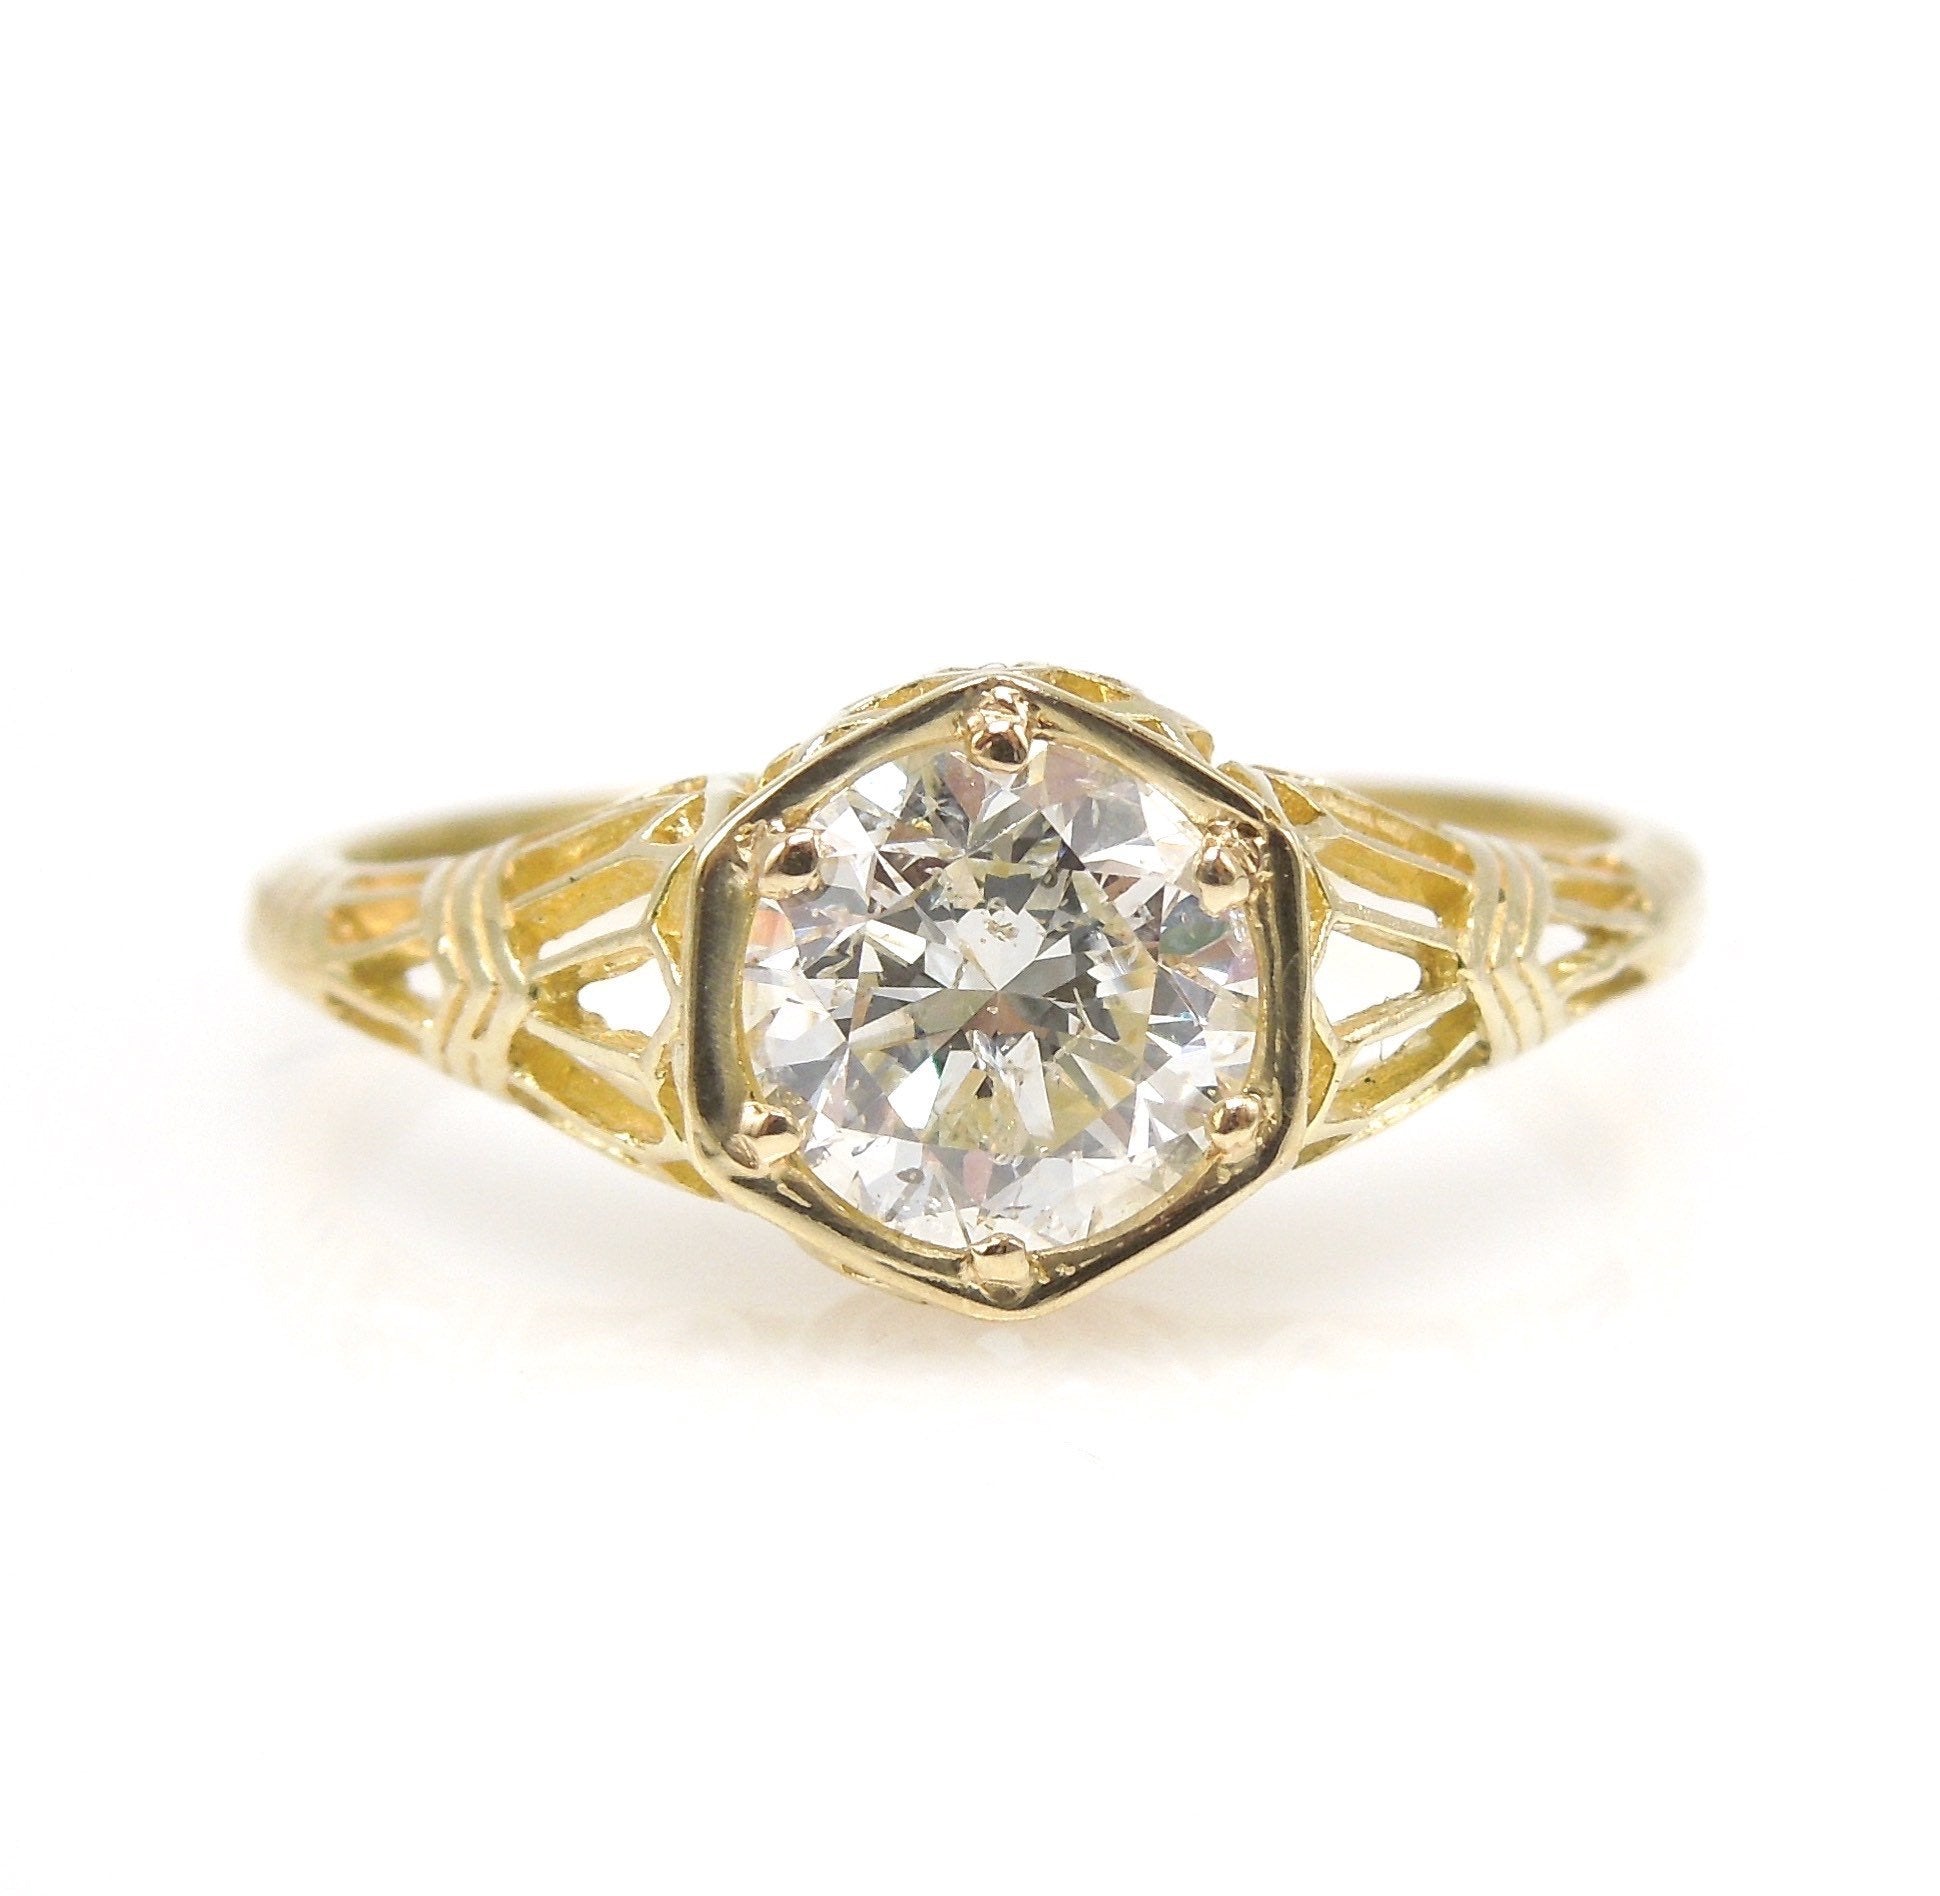 Edwardian Style 18K Yellow Gold Filigree 0.90ct Diamond Engagement Ring - Bead Set with Hexagonal Head